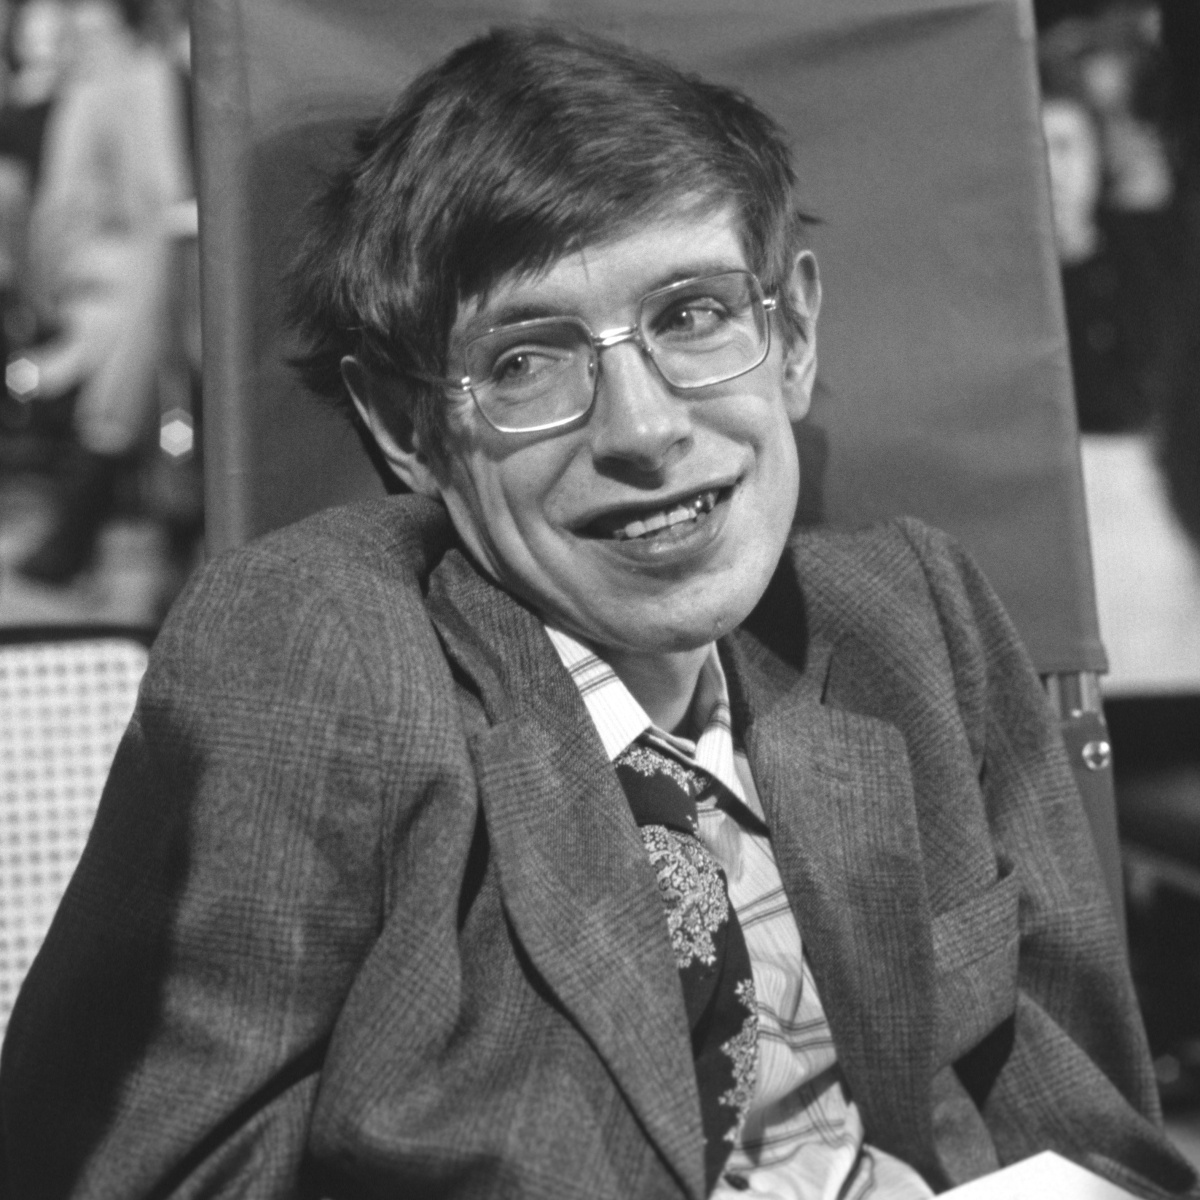 Photograph of Stephen Hawking.